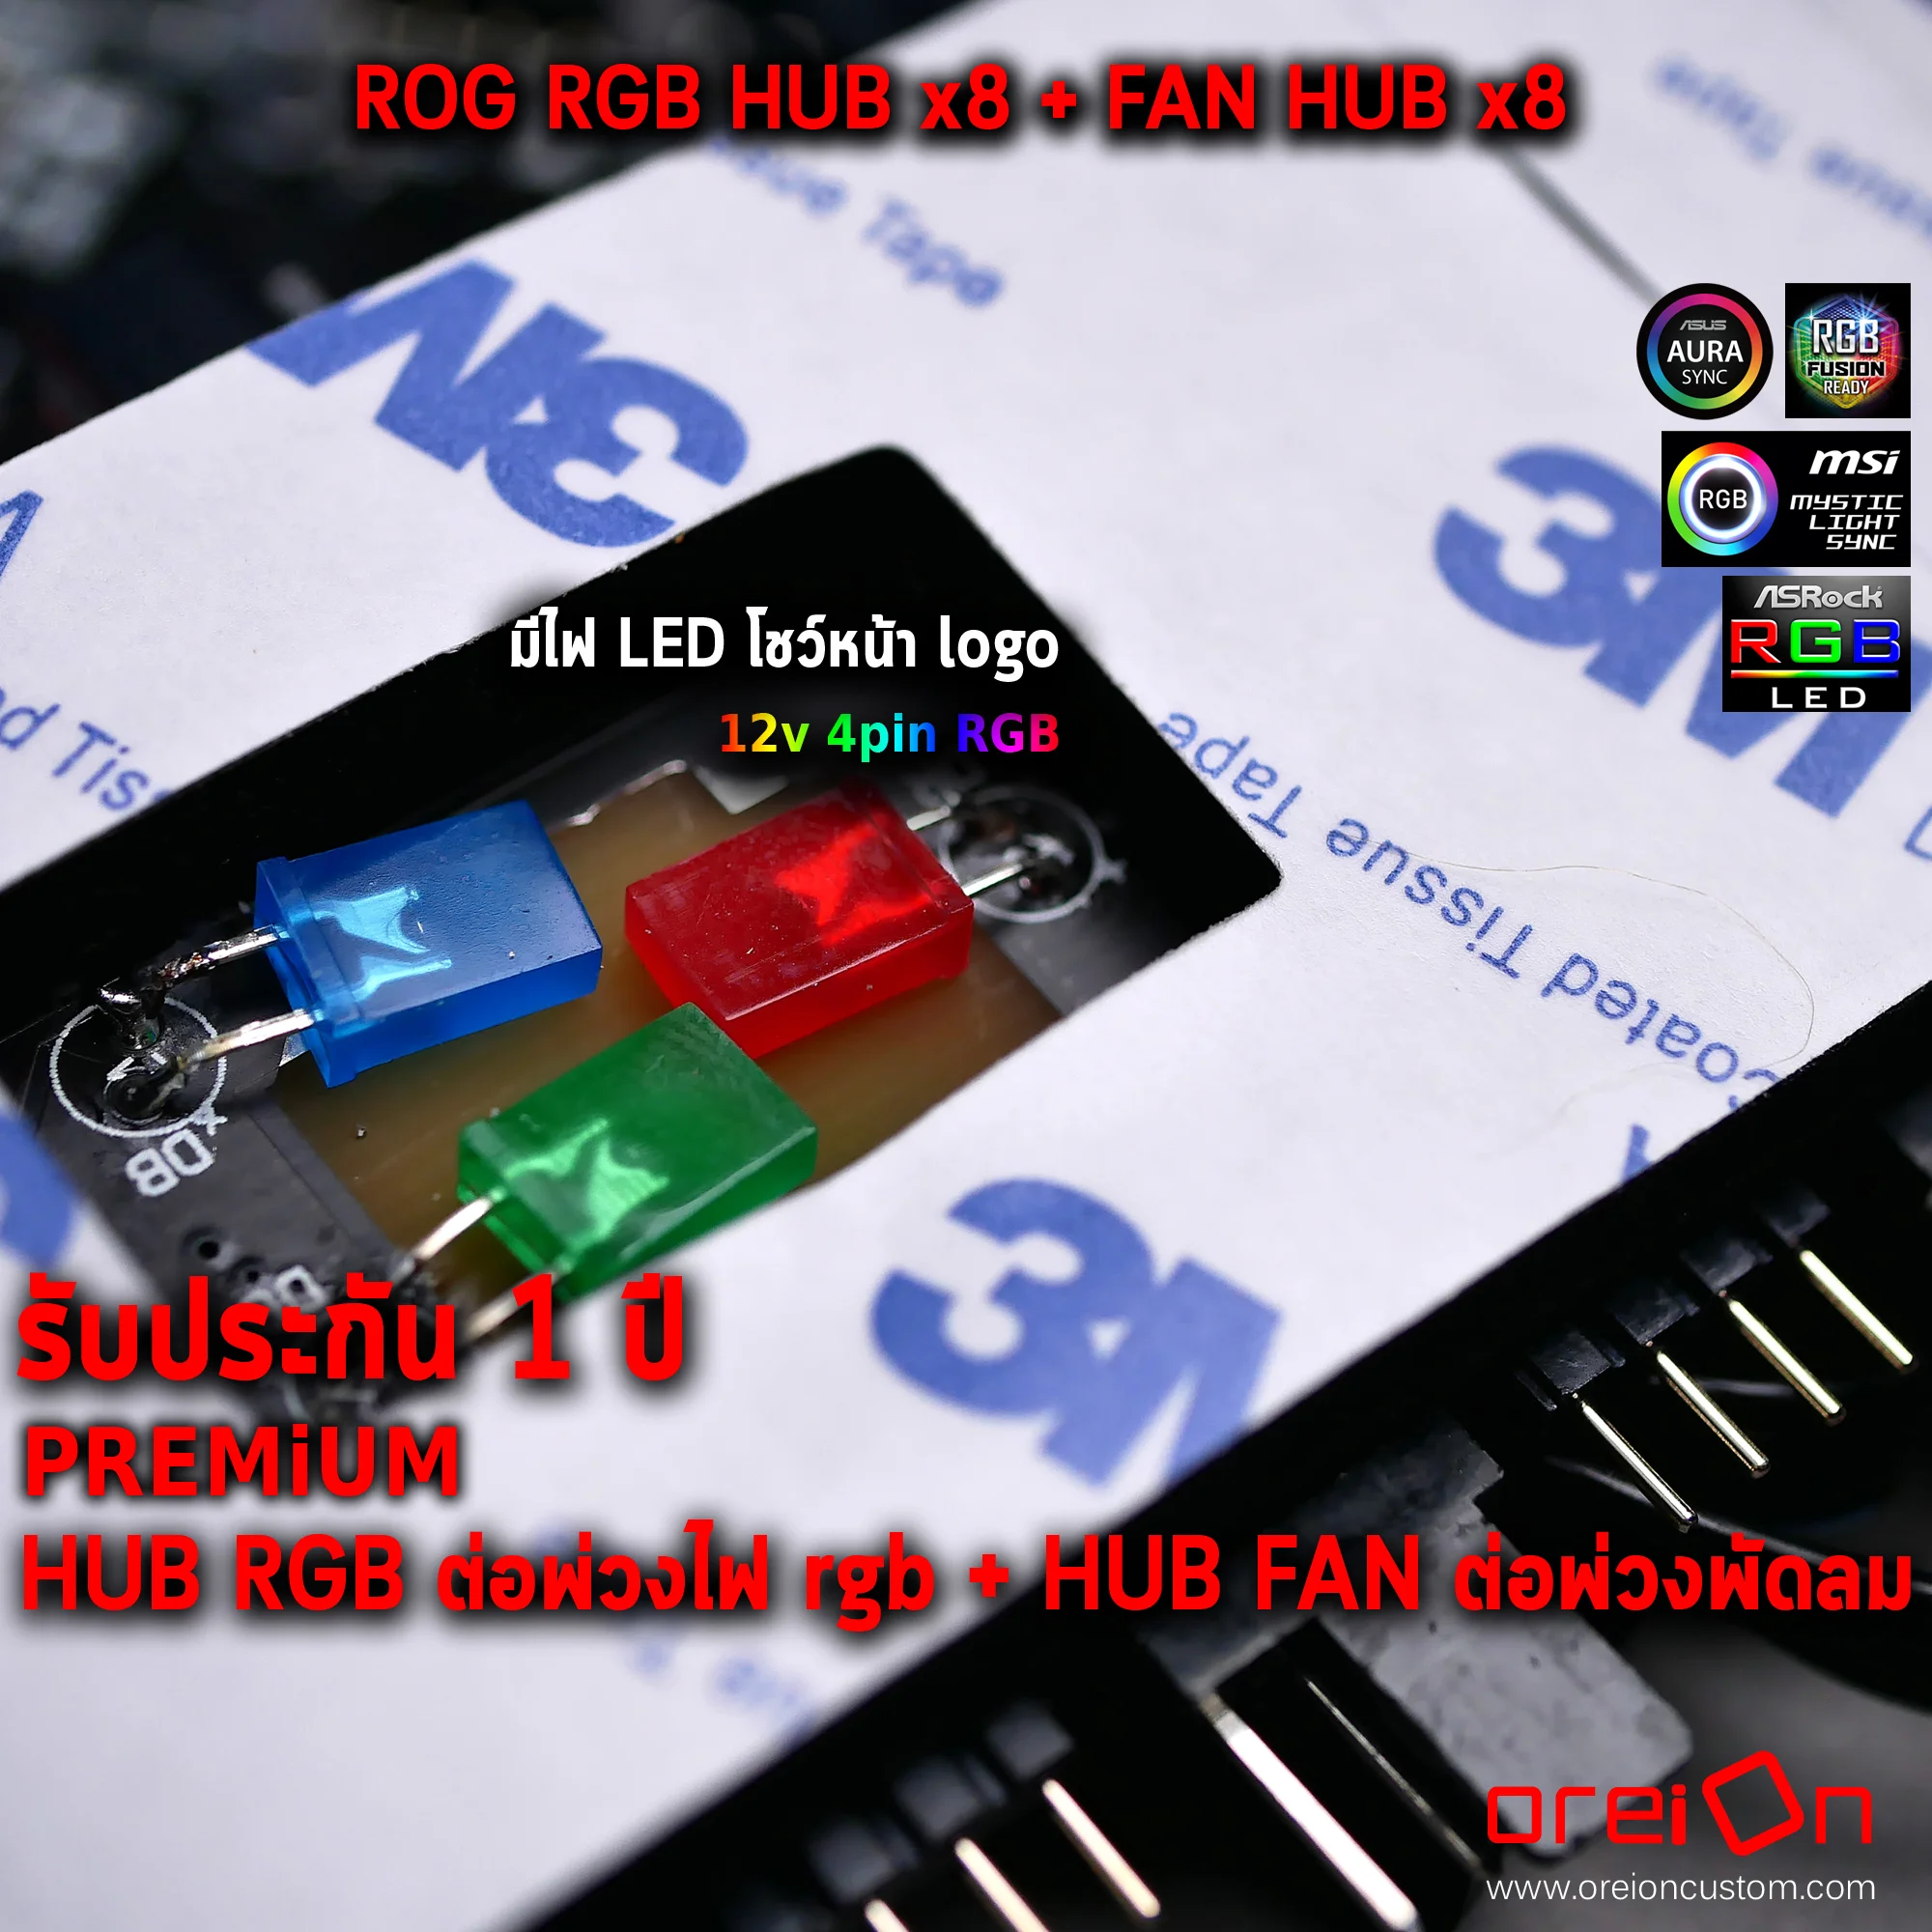 FAN HUB PWM X8 2IN1 Hub ROG RGB LED